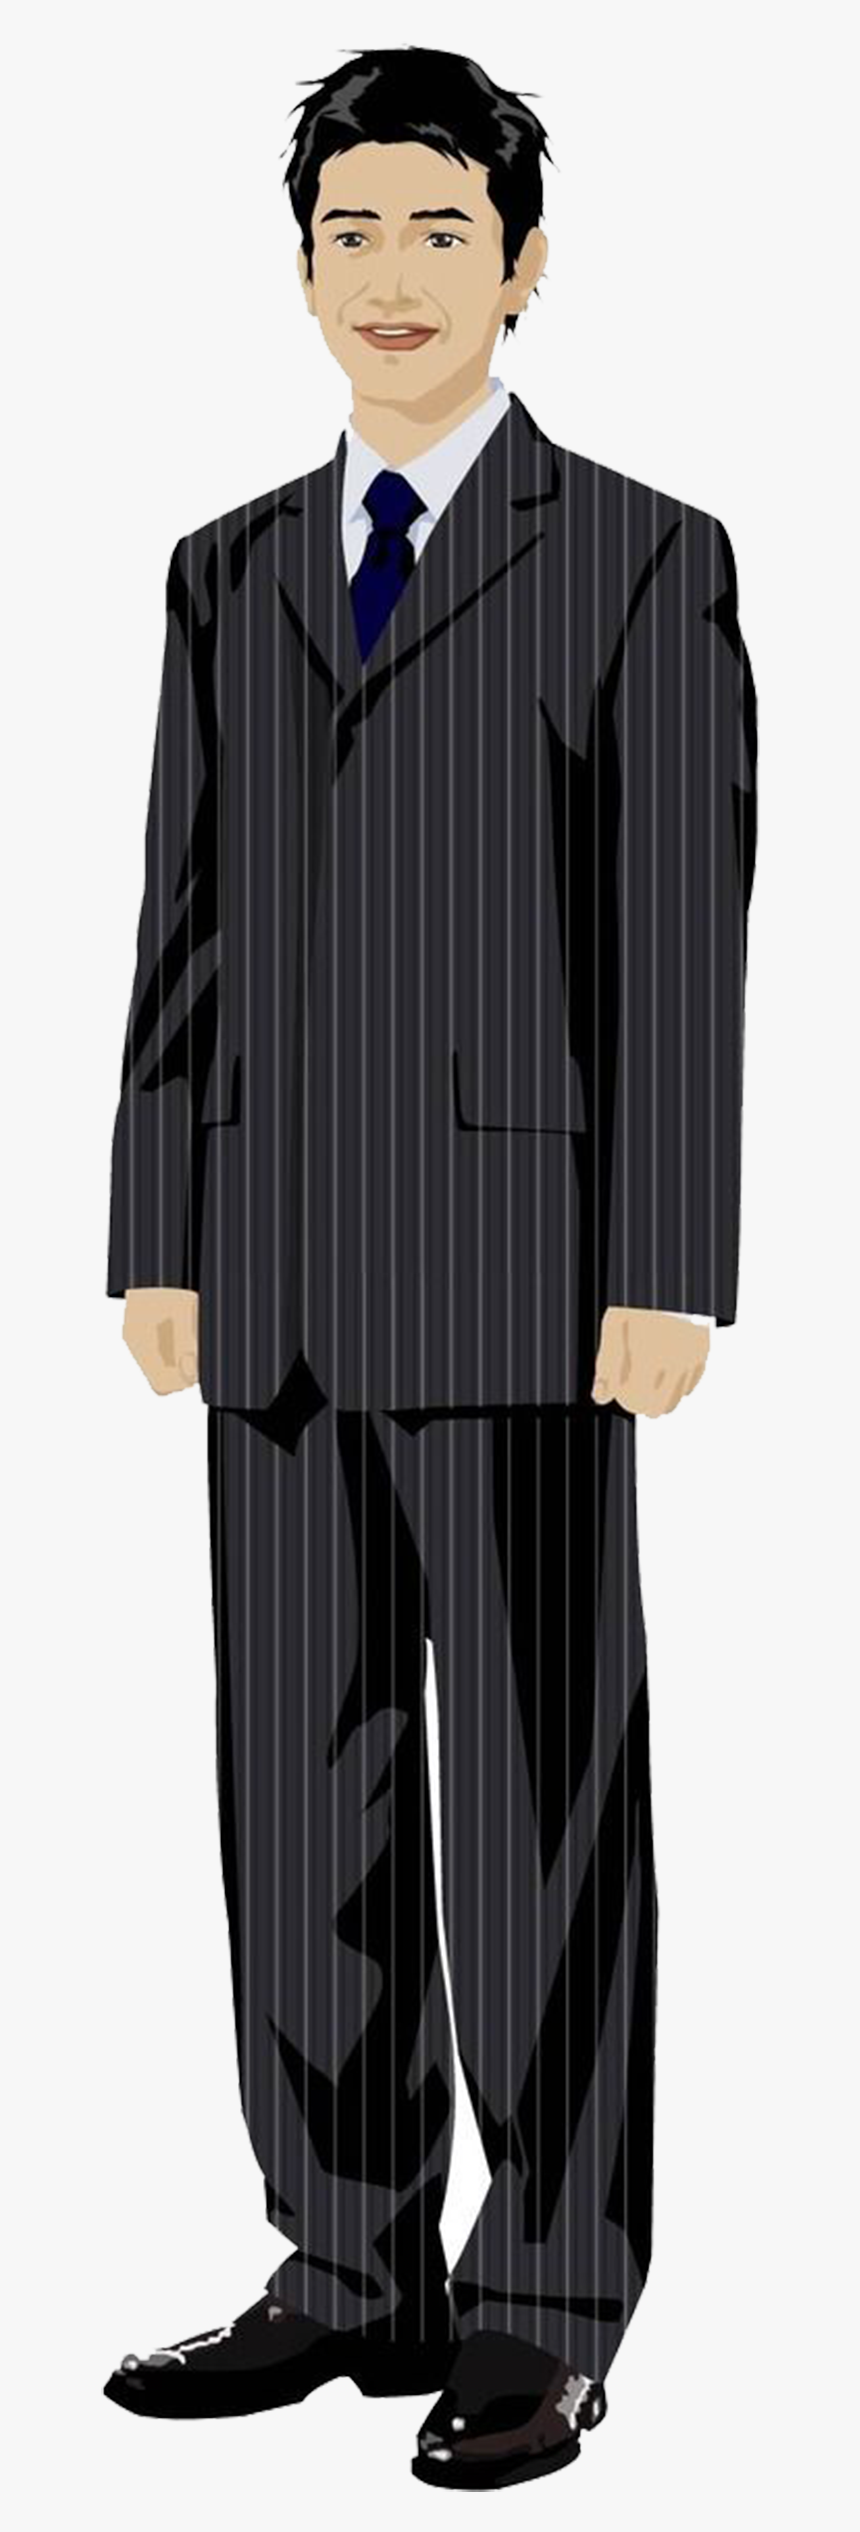 Transparent Man Standing Png - Cartoon Man Full Body, Png Download, Free Download